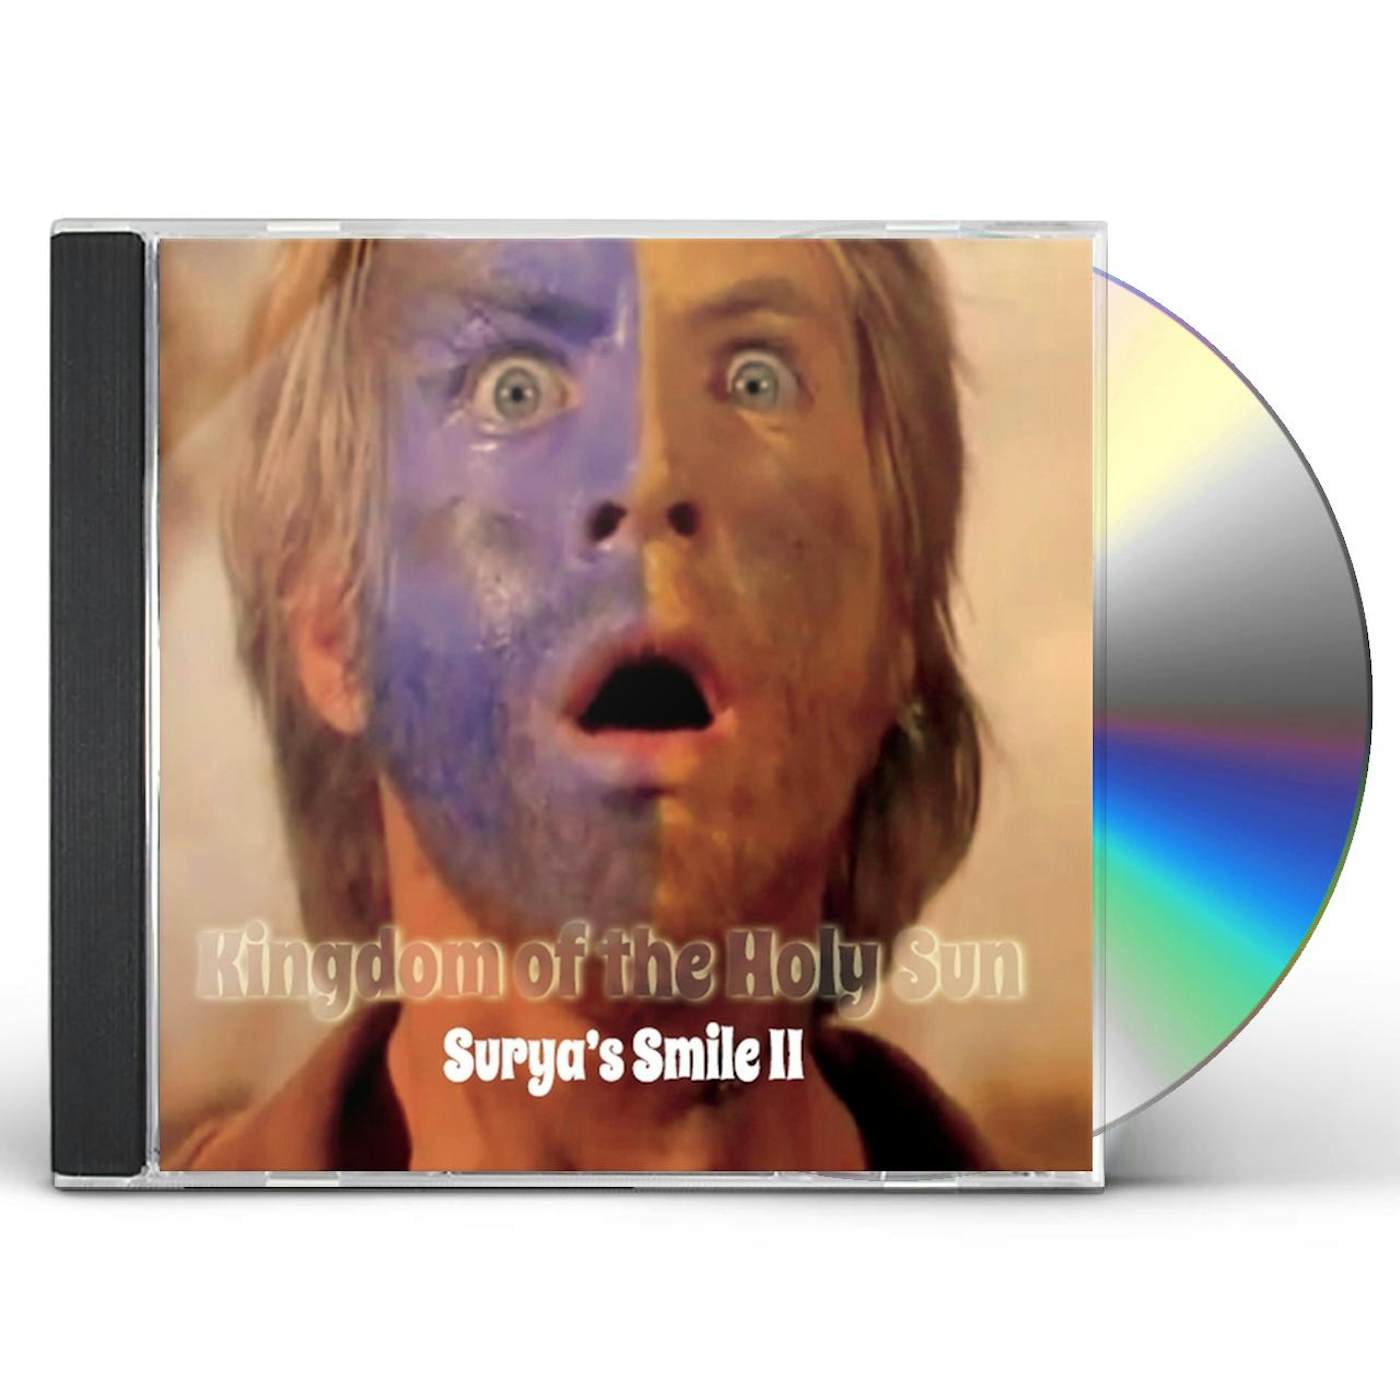 Kingdom of the Holy Sun SURYAS SMILE II CD